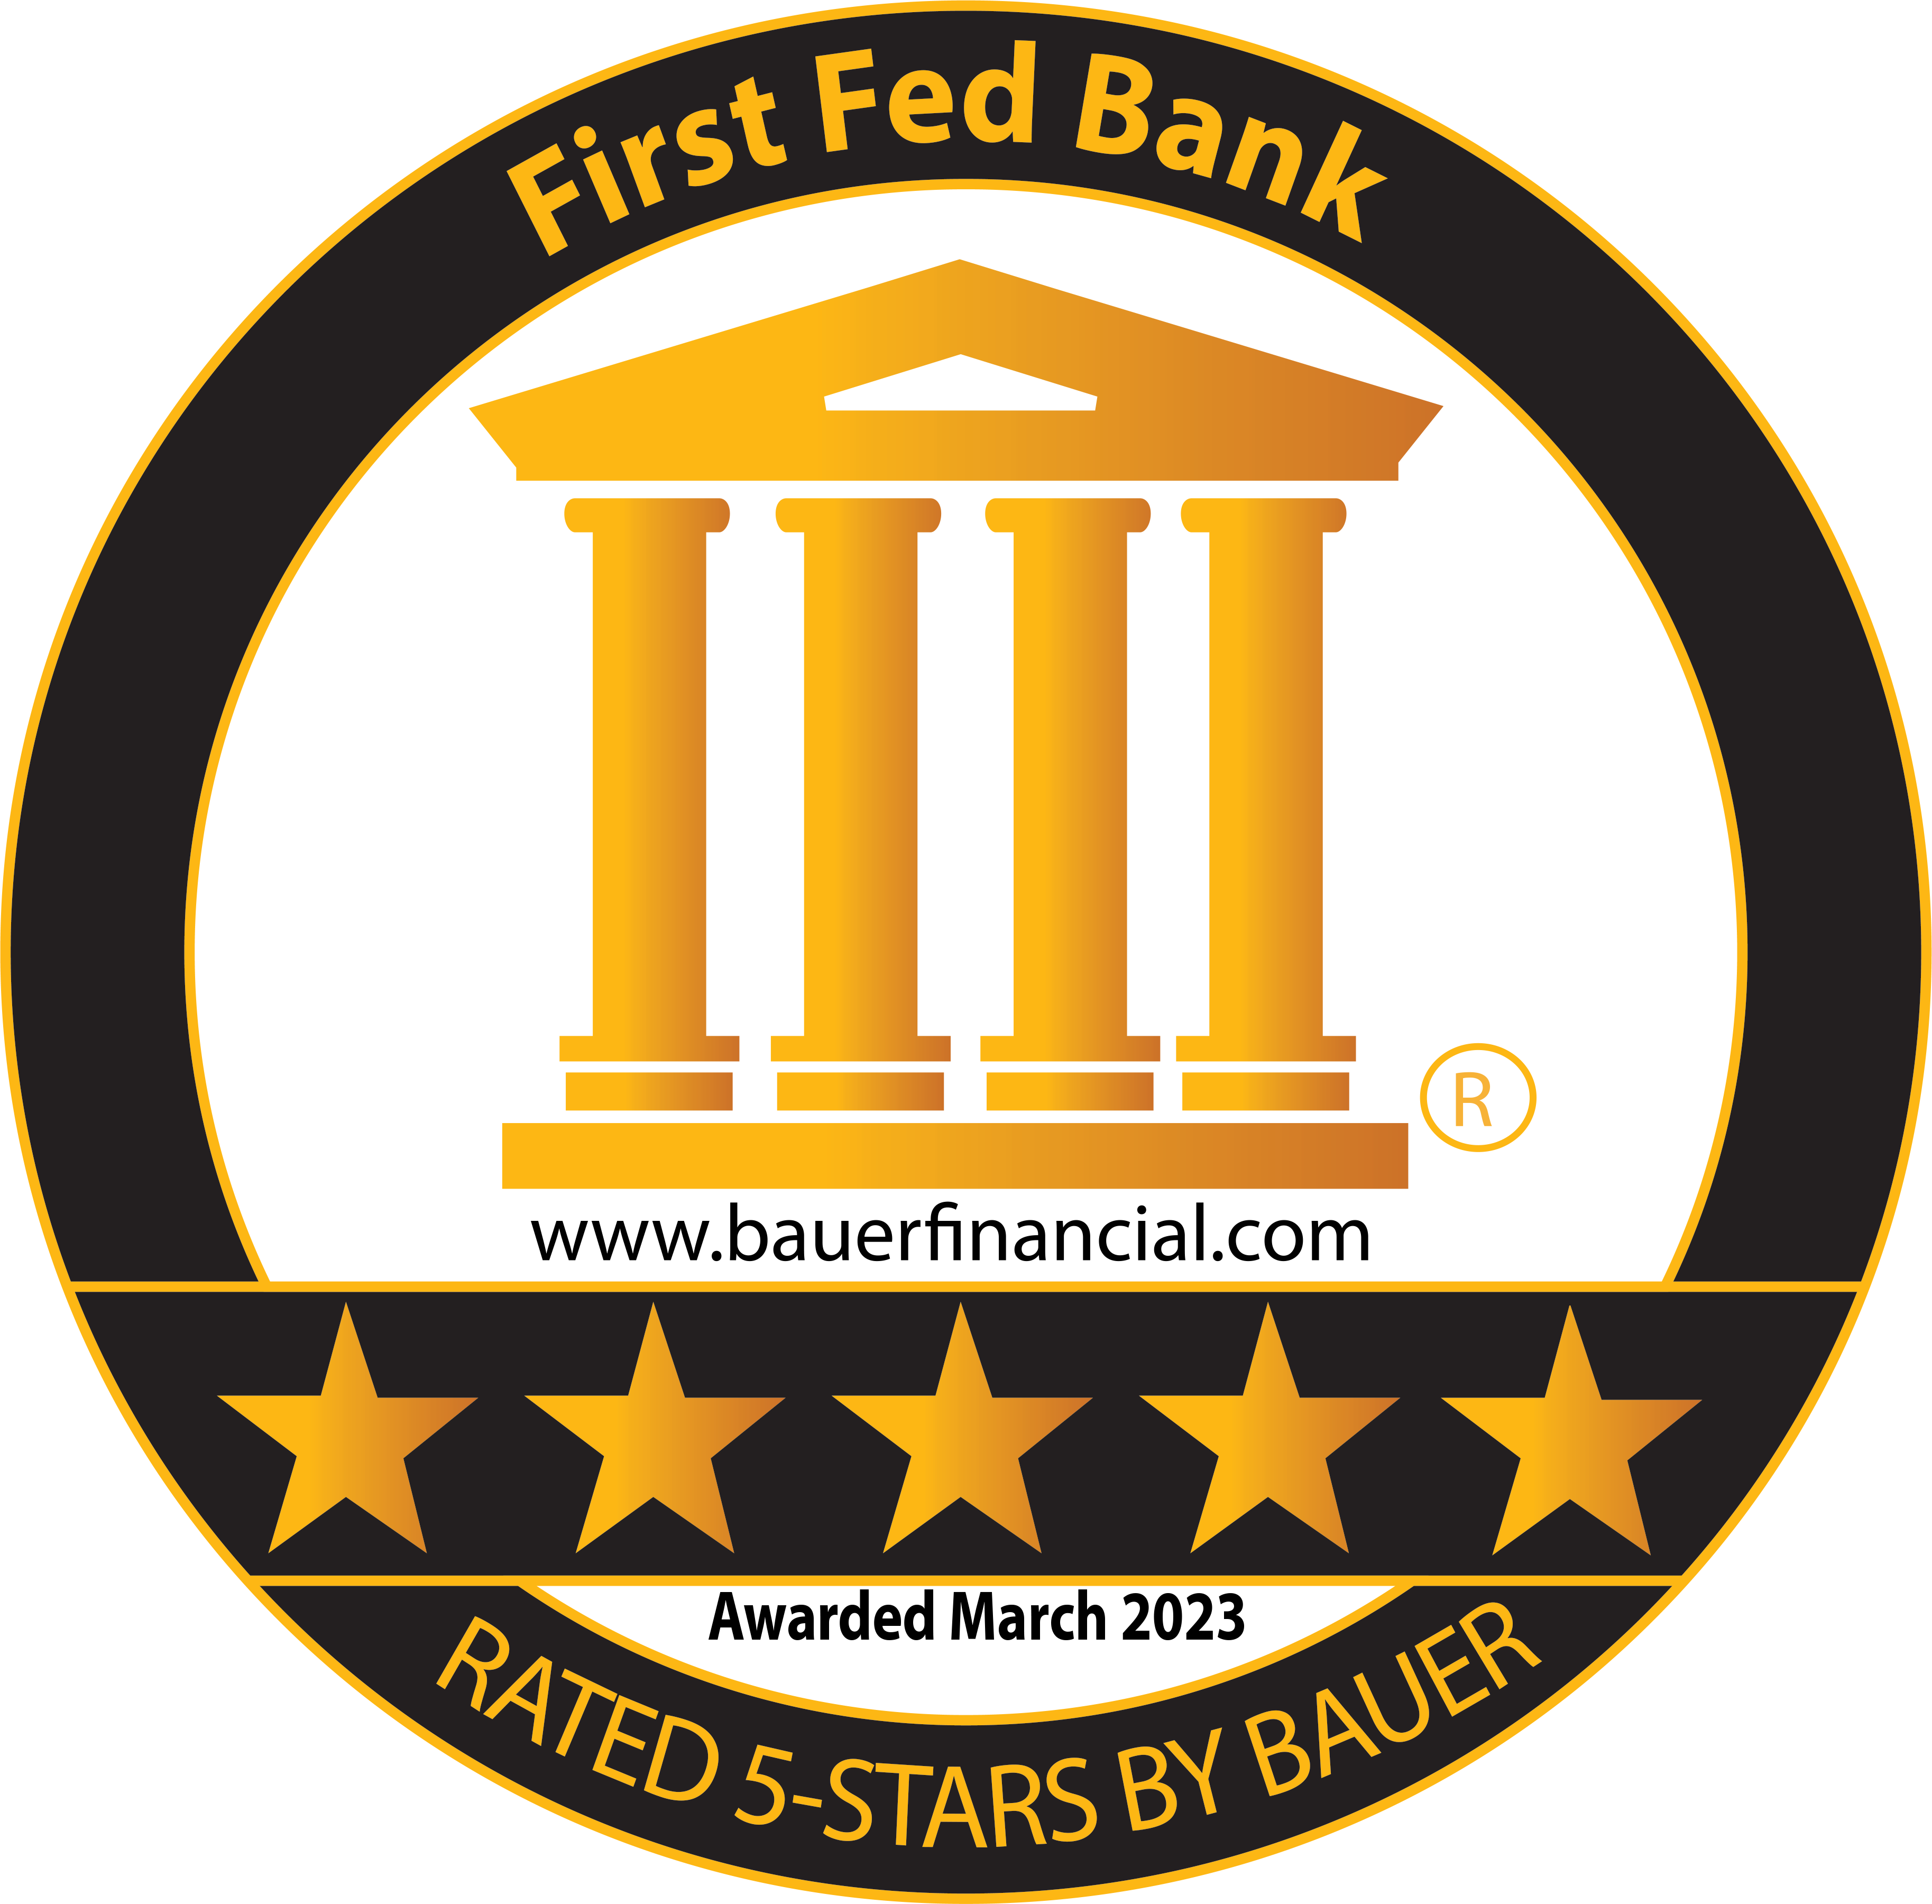 Bauer Financial - First Fed Bank - Mar 2023